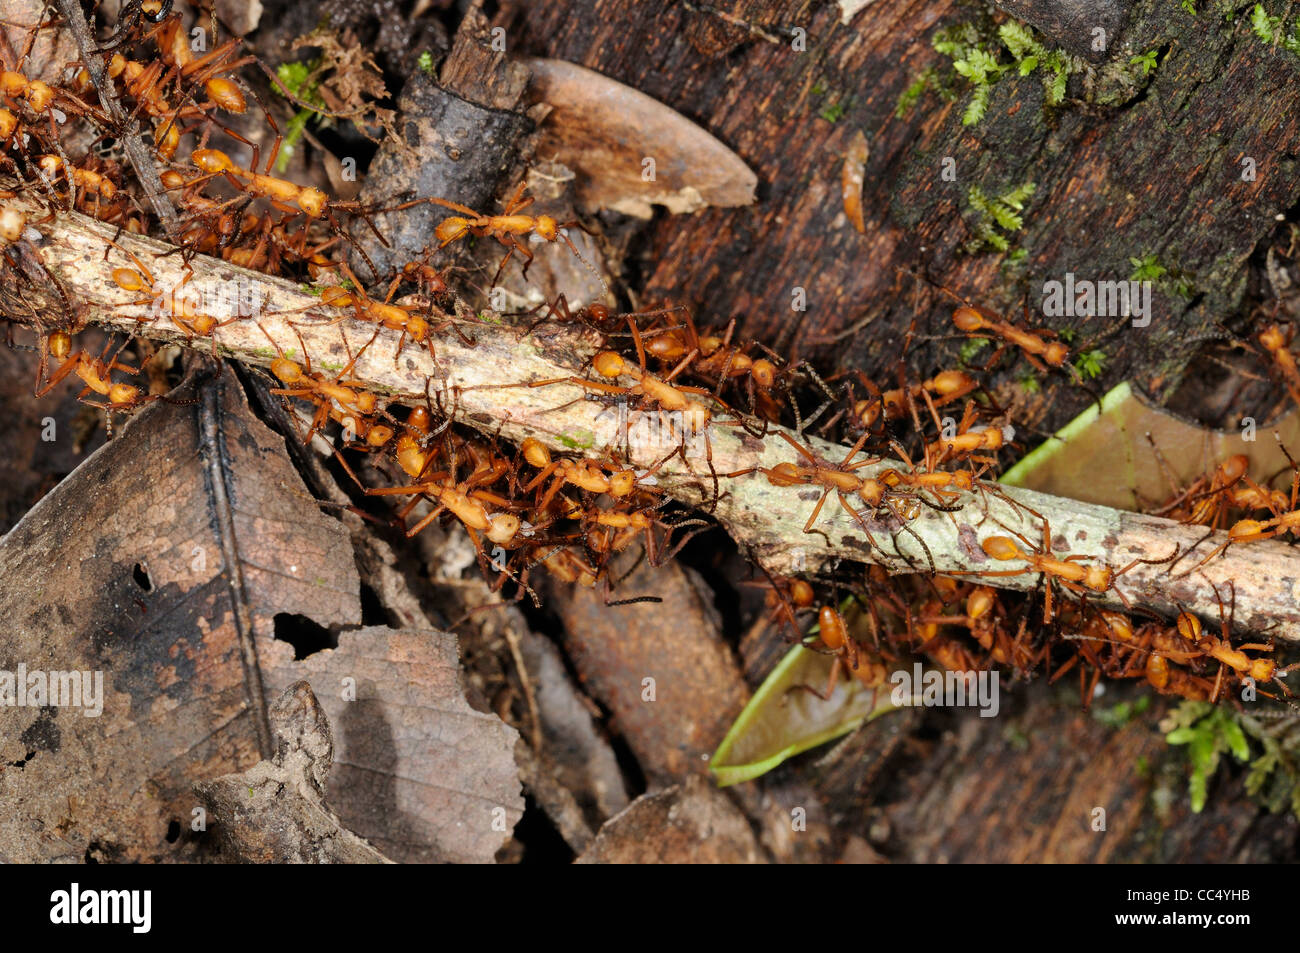 Ejército Rojo (Ant) especie Eciton Rupununi, Guyana Foto de stock